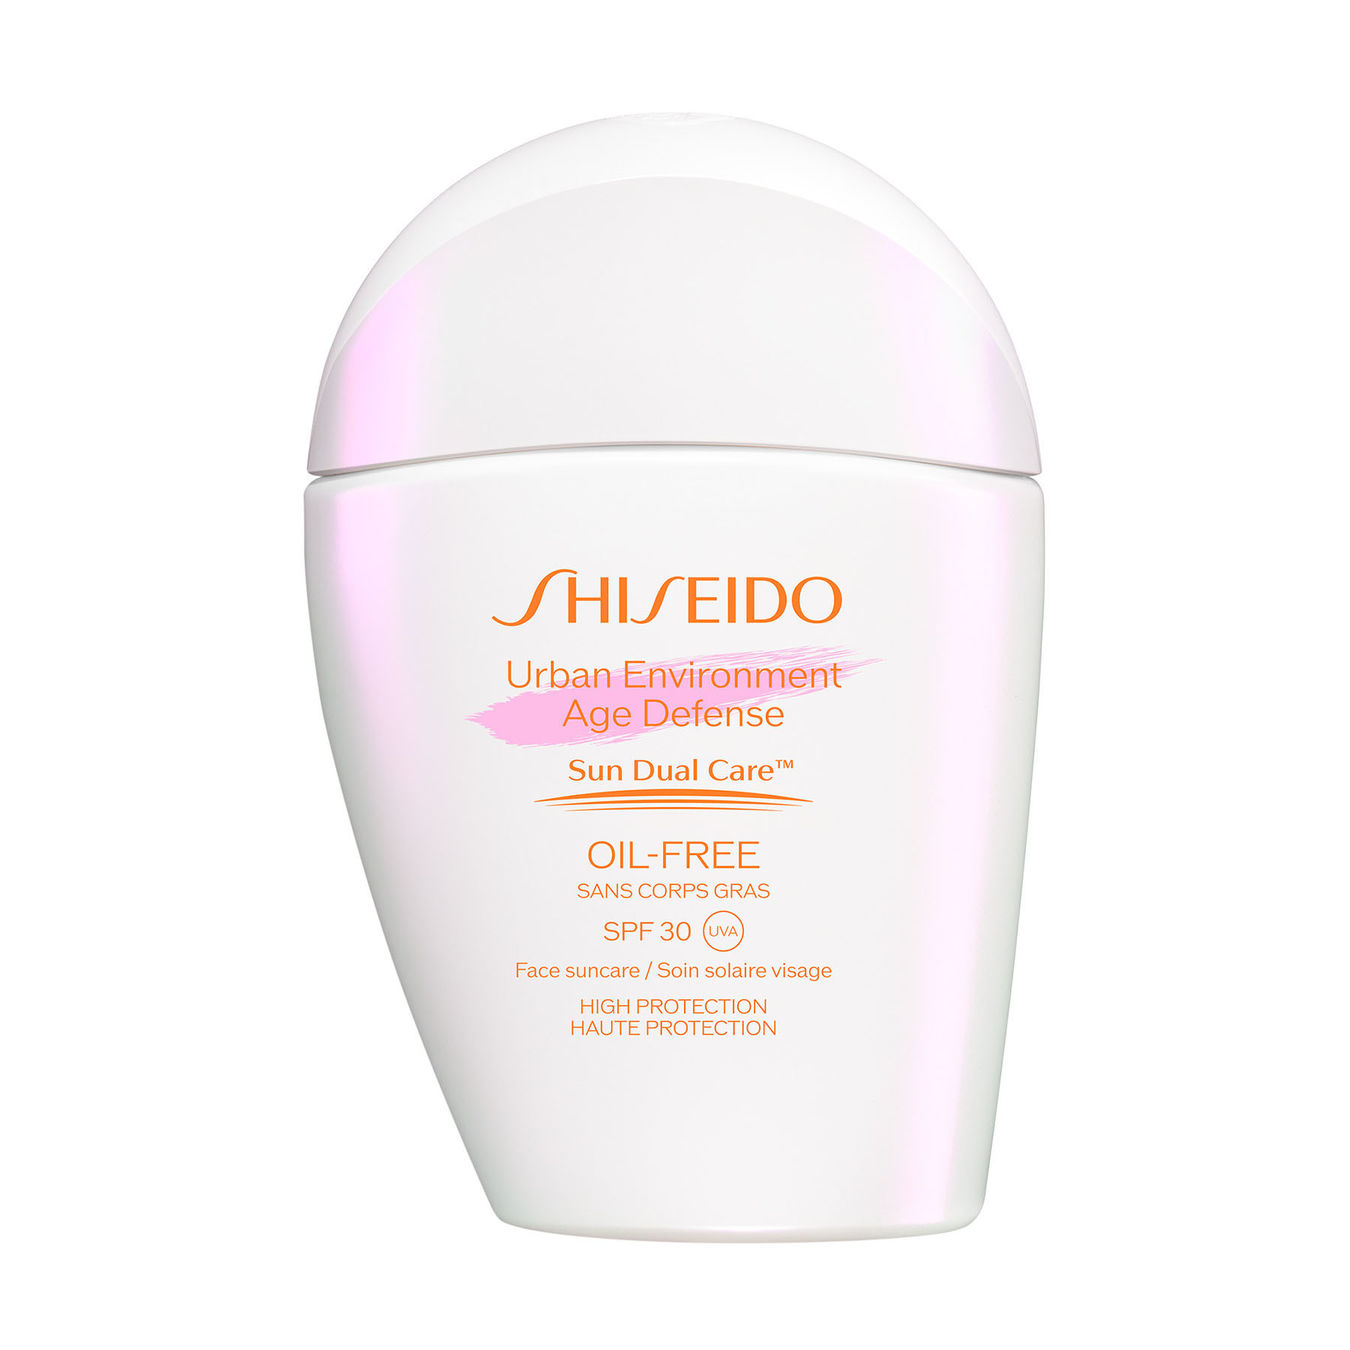 Shiseido Urban Environment Age Defense Oil-Free SPF 30 von Shiseido